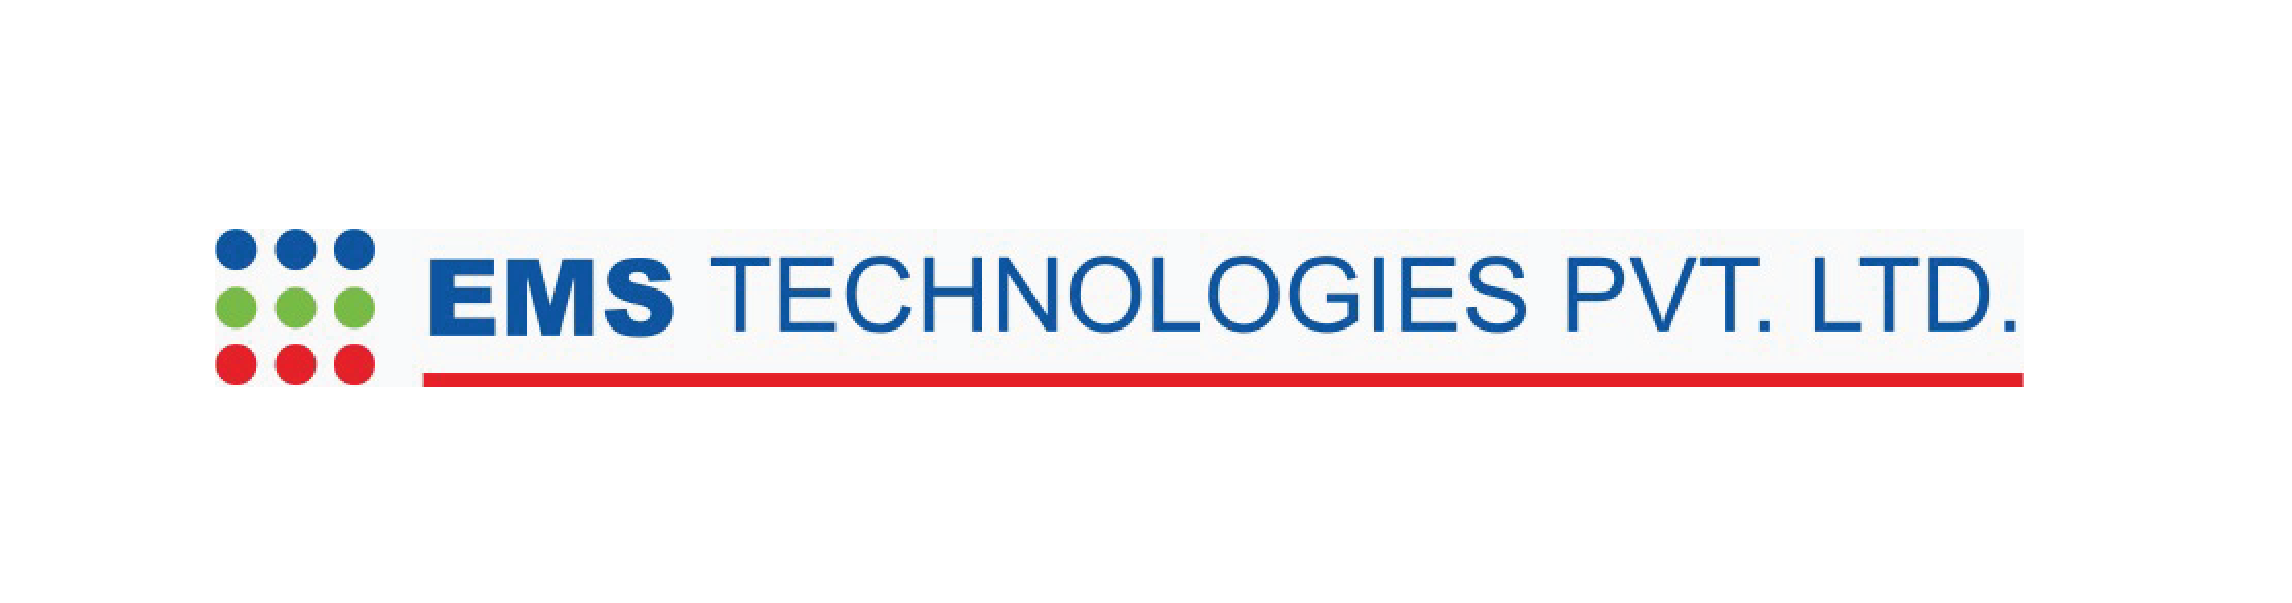 EMS Technologies Pvt. Ltd.